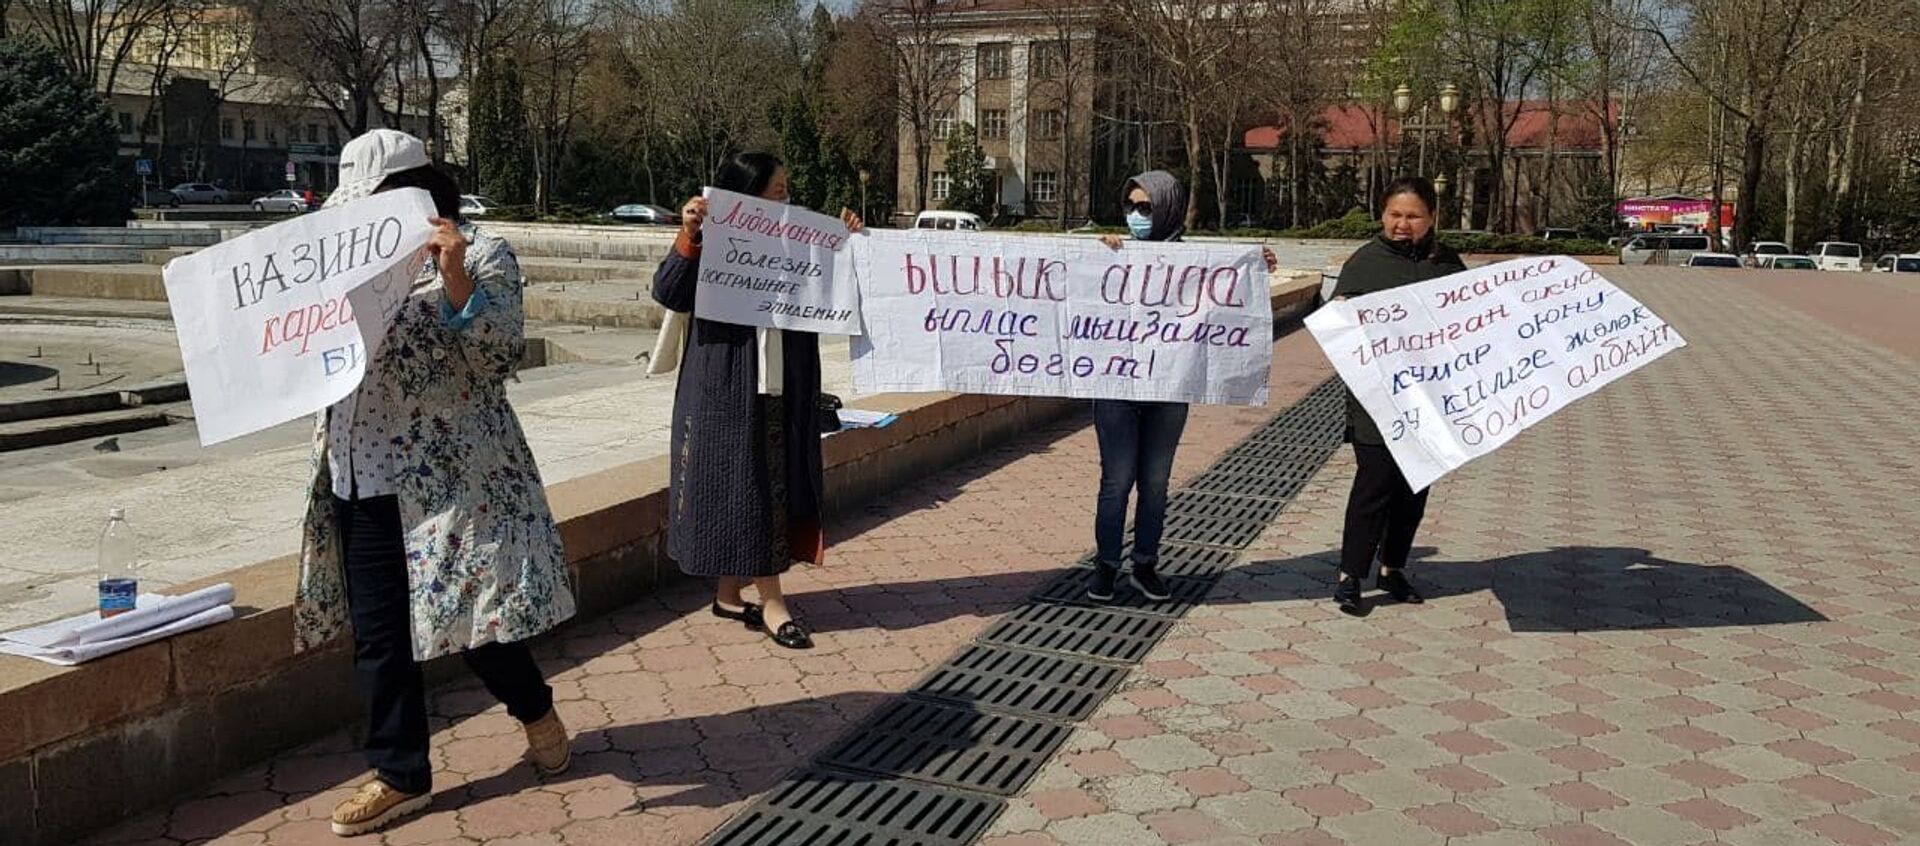 Митинг против легализации казино в центре Бишкека - Sputnik Кыргызстан, 1920, 15.04.2021